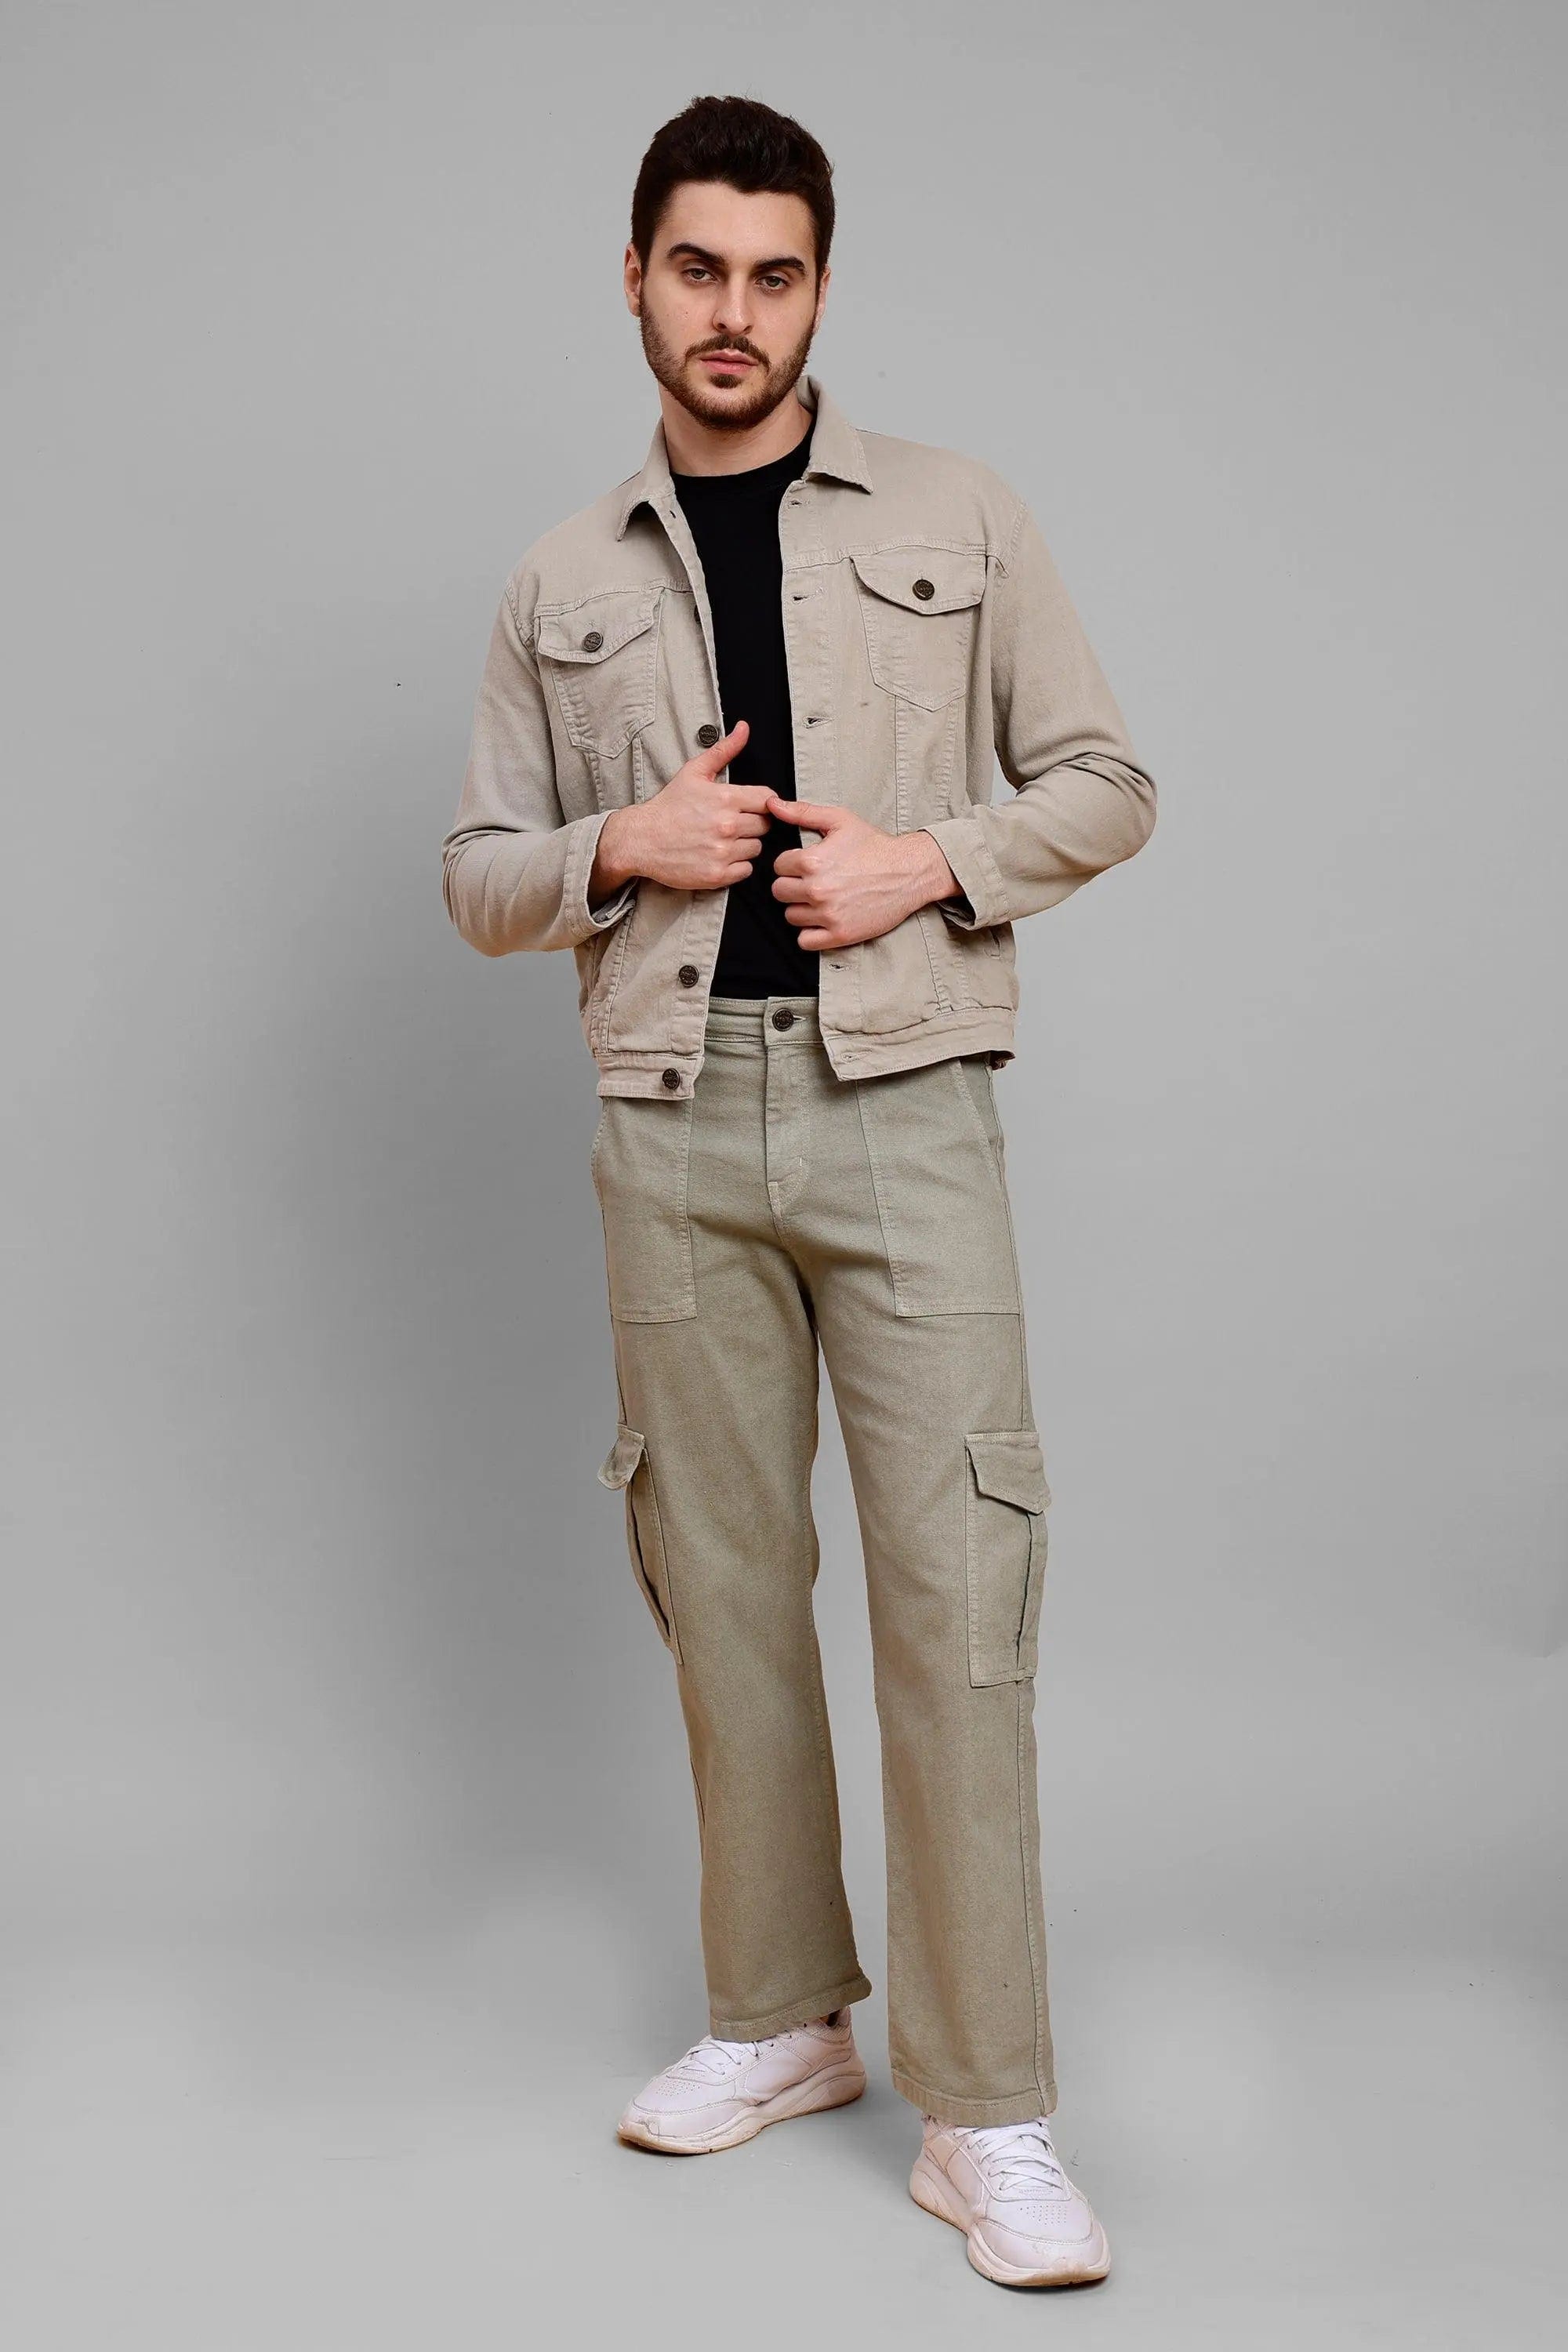 Buy Hozie Mens Jean Denim Jacket,Casual Regular Fit Jacket (S) at Amazon.in